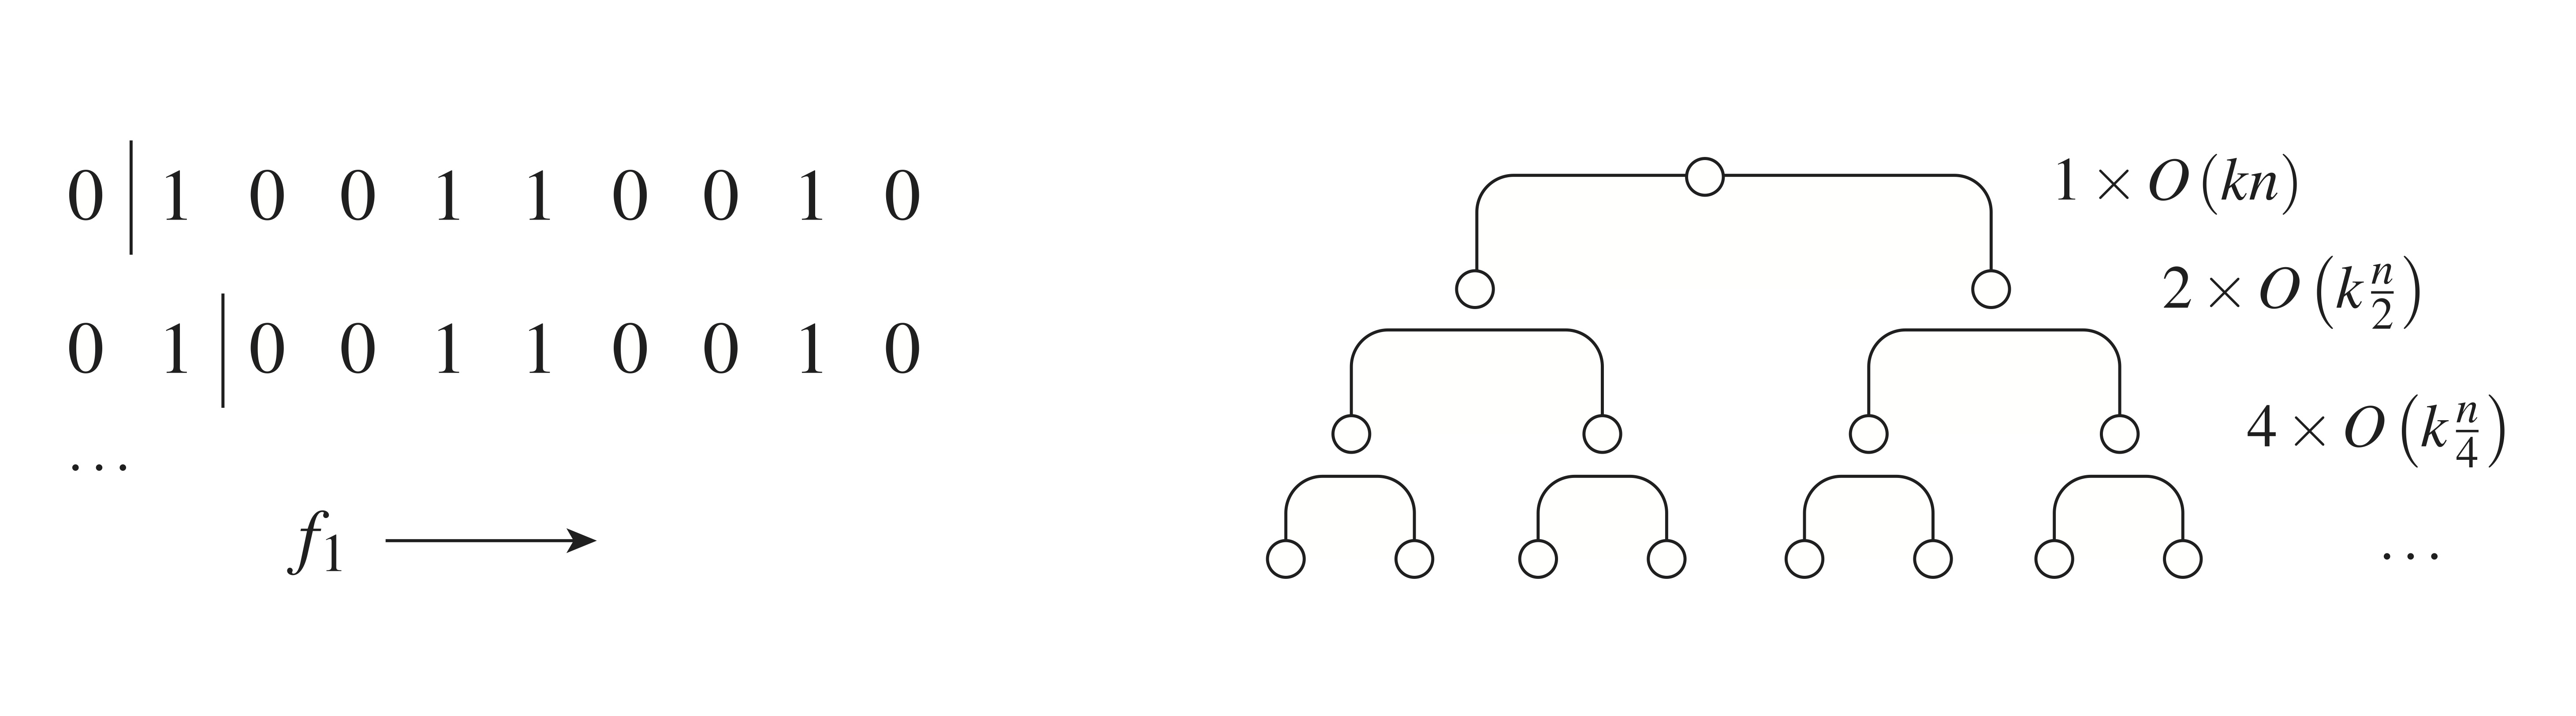 tree_complexity